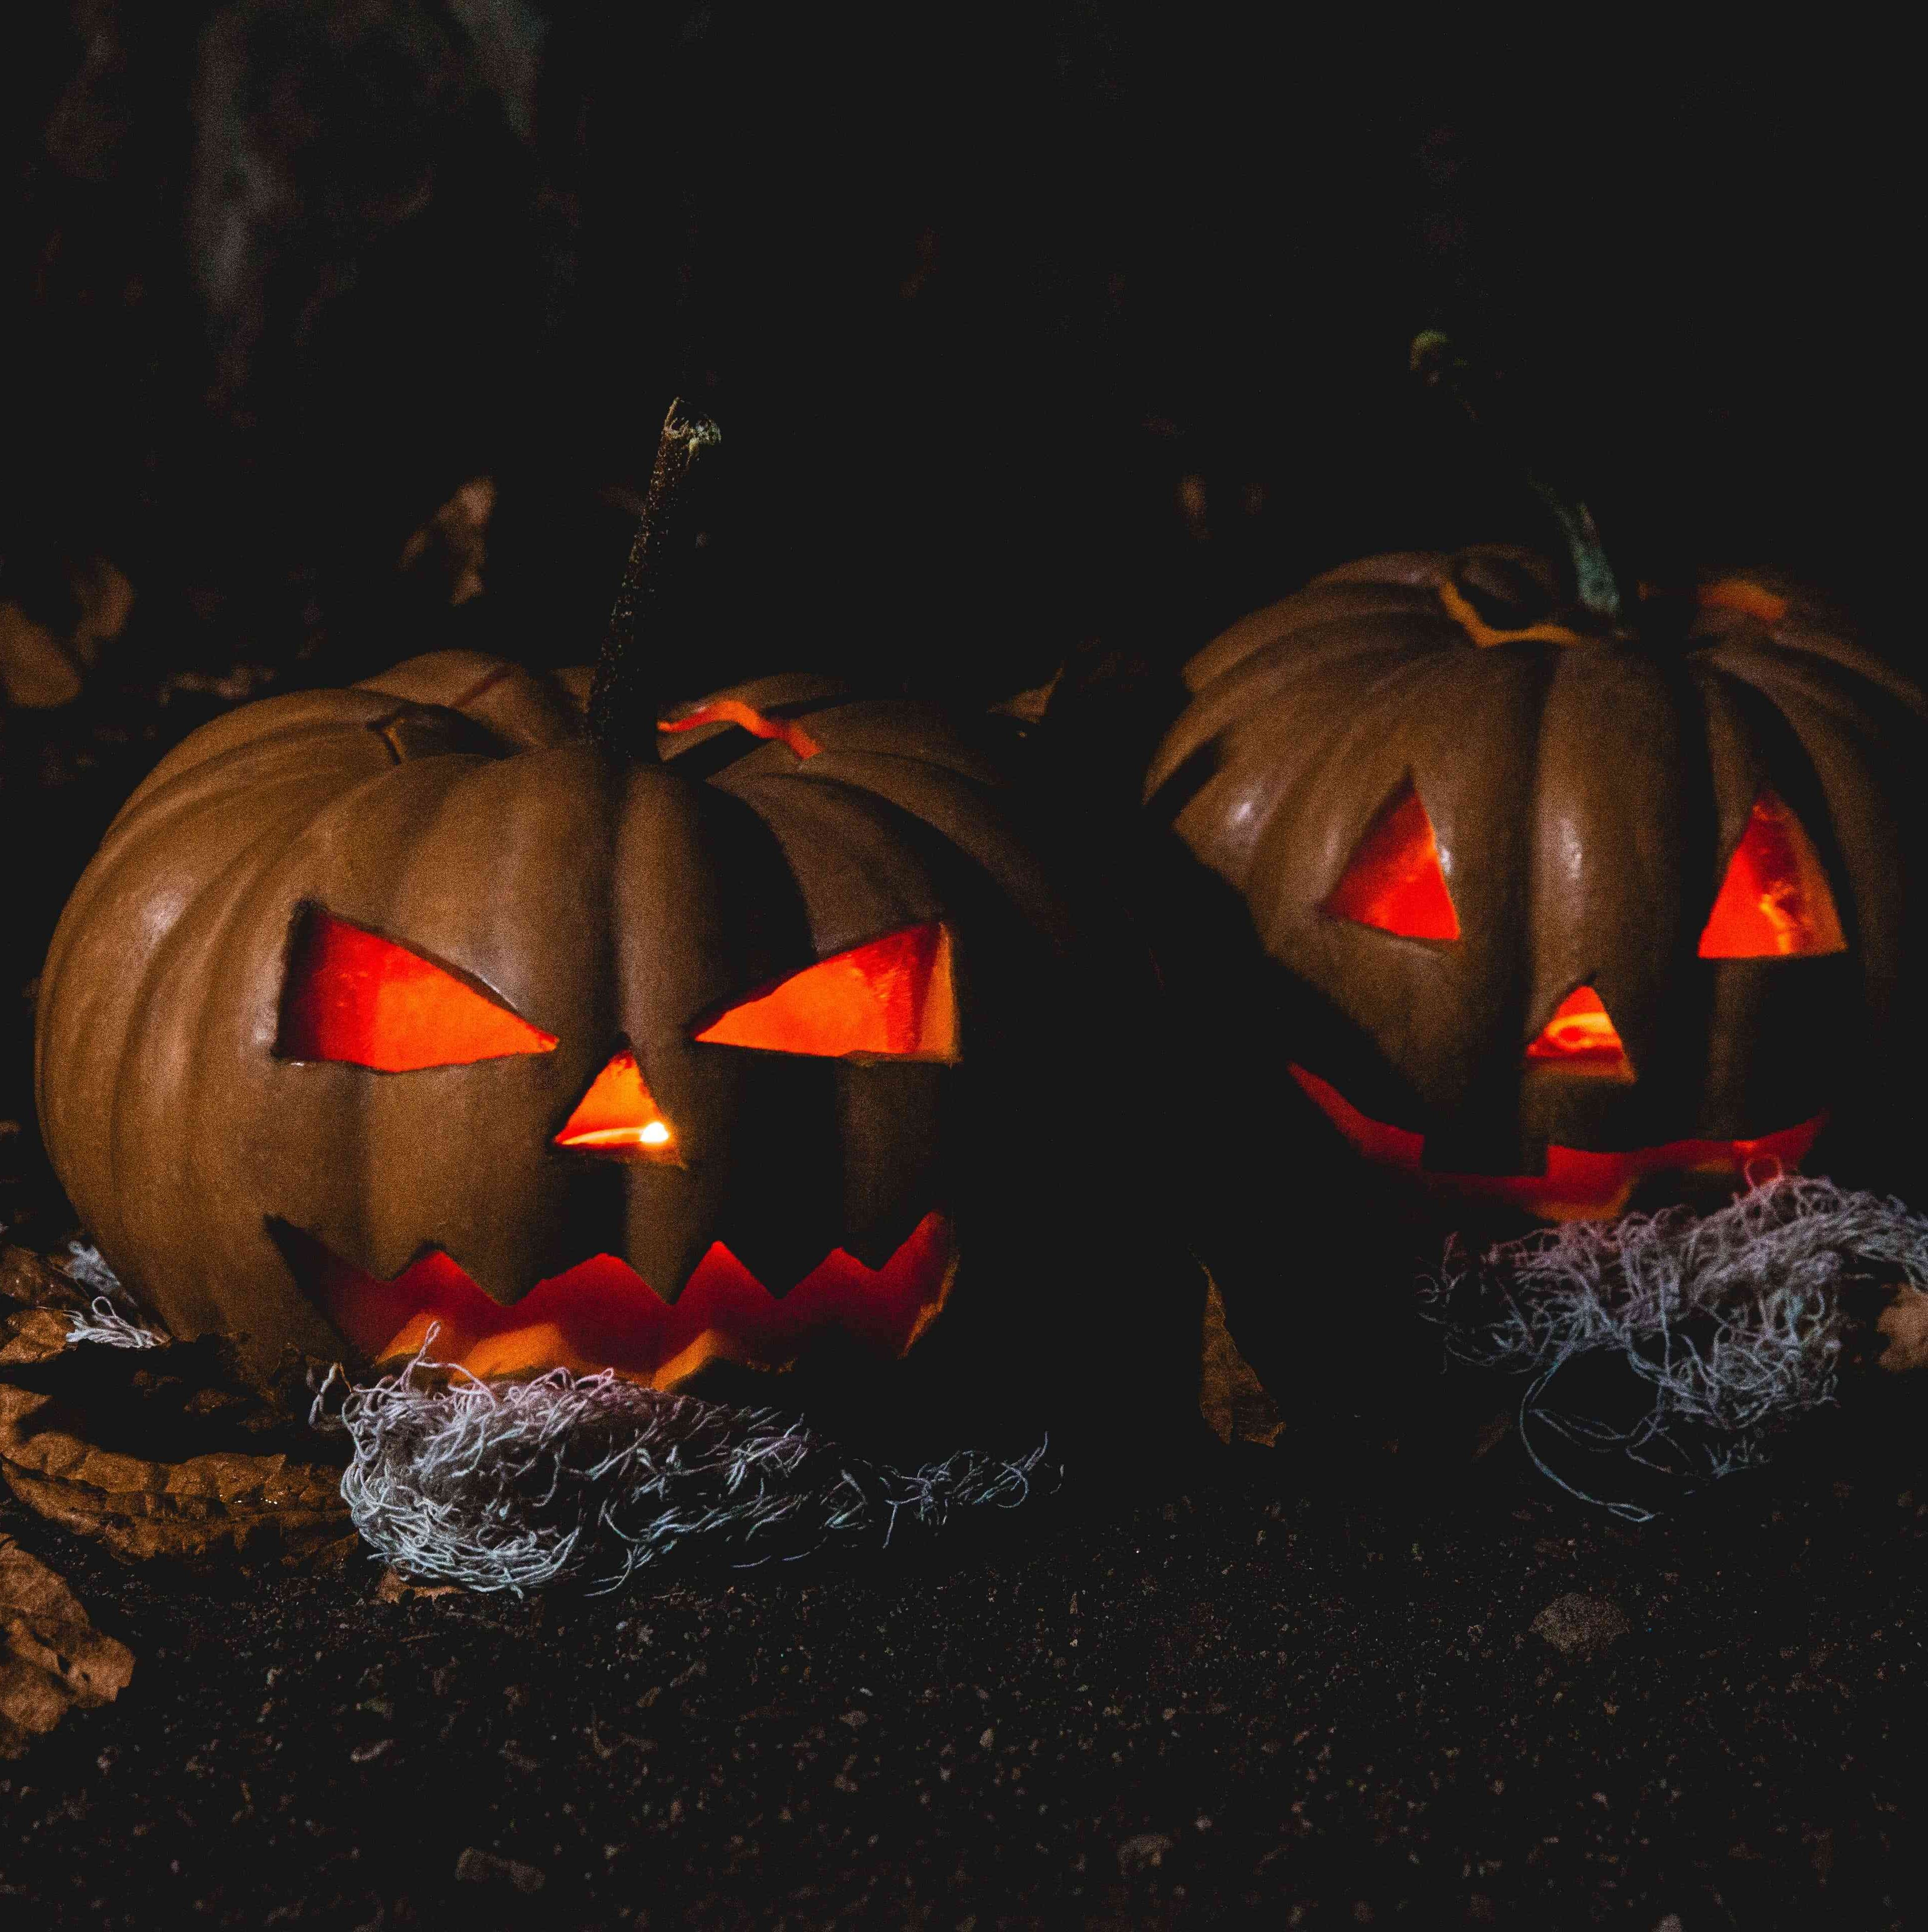 Two spooky pumpkins